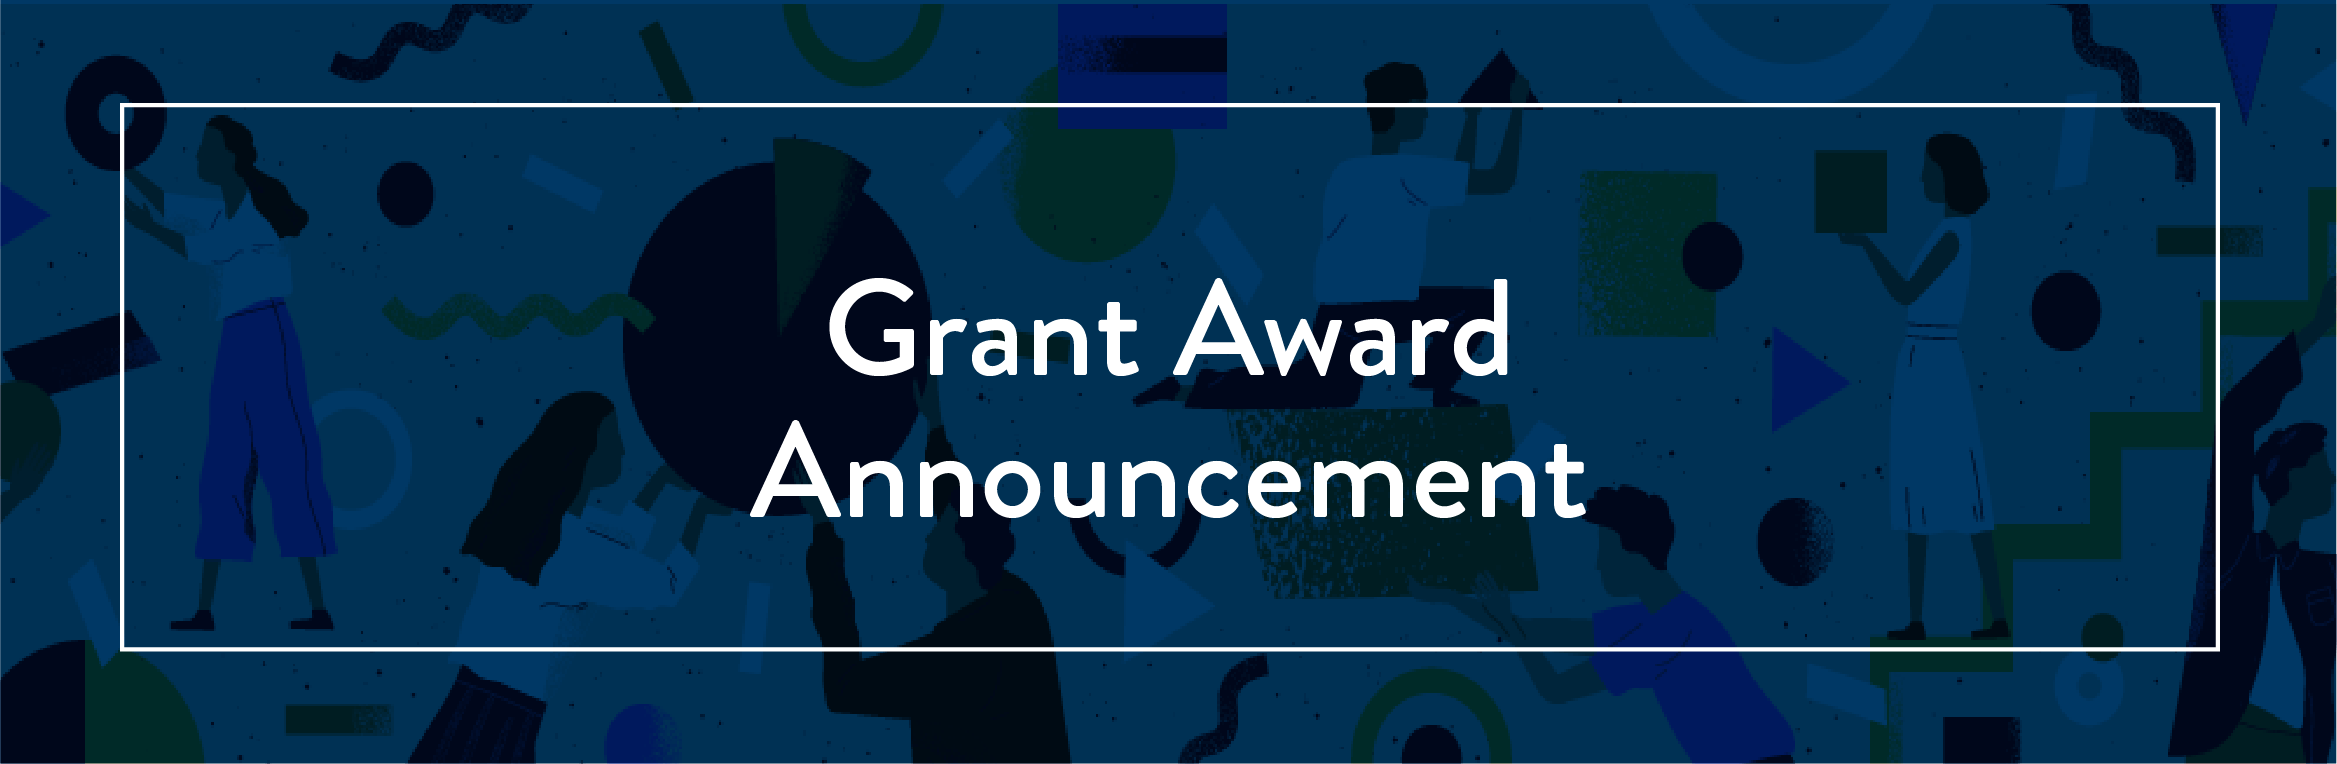 Grant Award Announcement